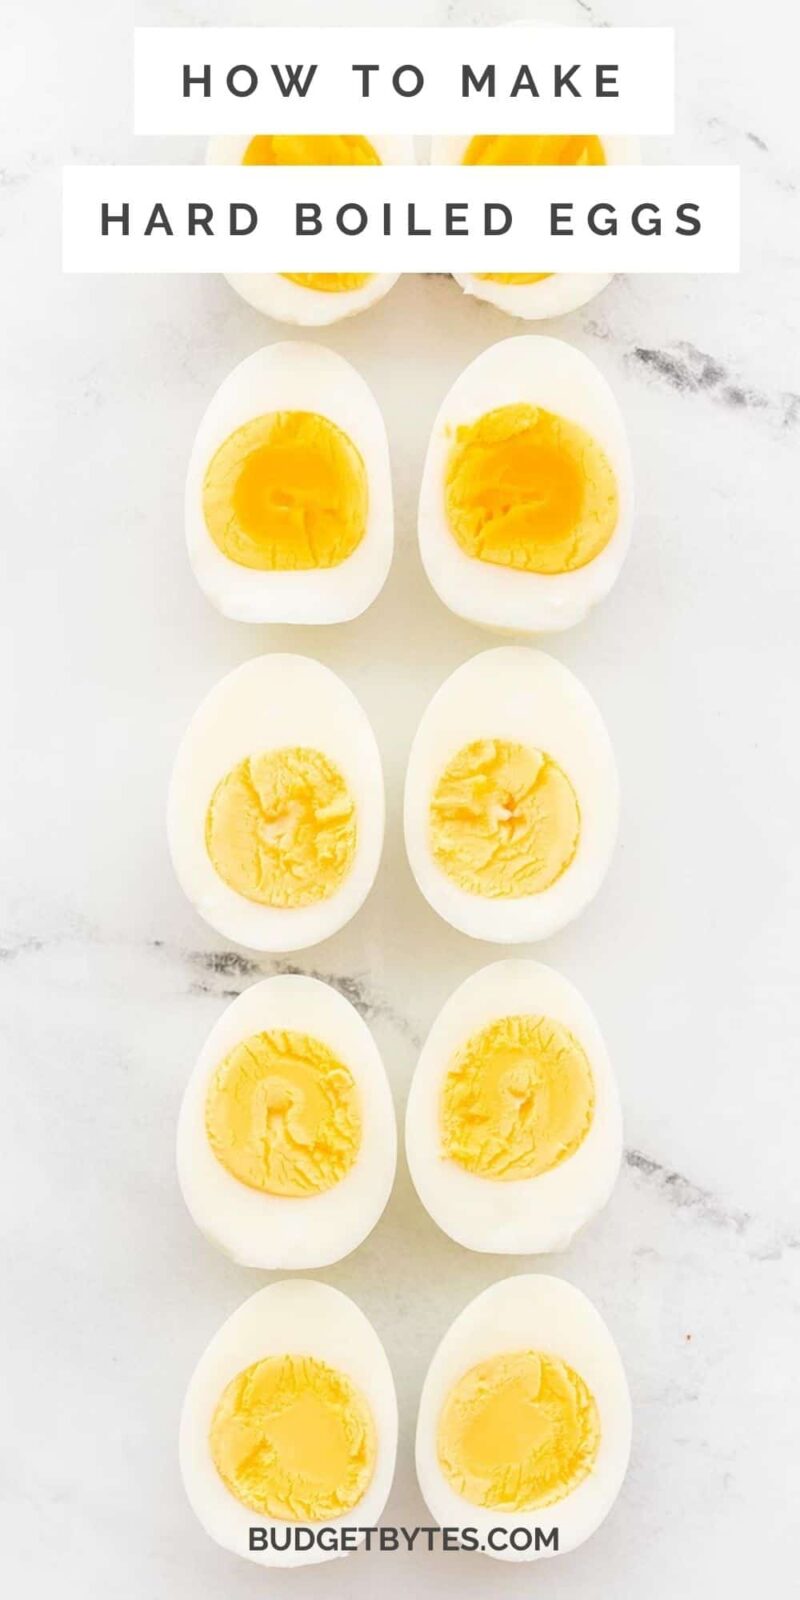 https://www.budgetbytes.com/wp-content/uploads/2021/11/How-to-Make-Hard-Boiled-Eggs-PIN5-800x1600.jpg